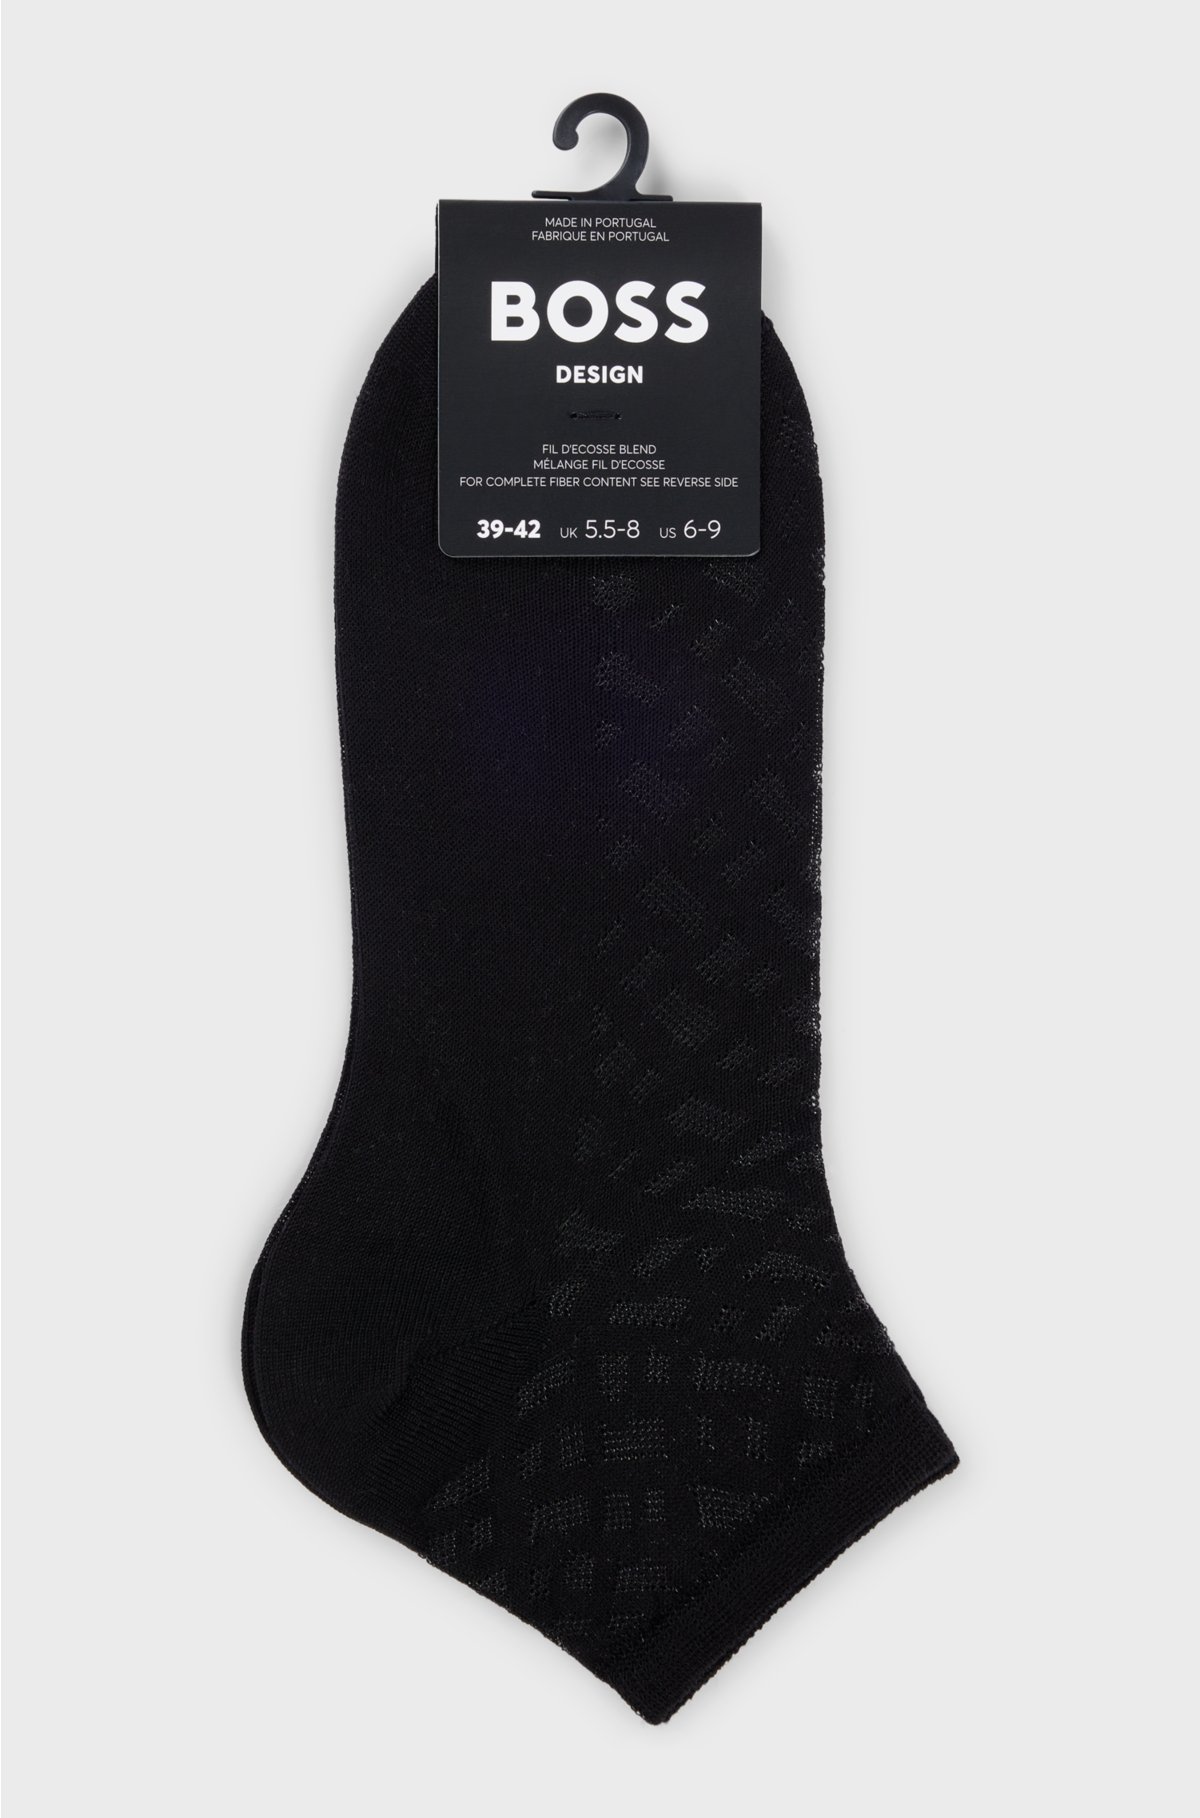 Monogram-knit short socks in a mercerised cotton blend, Black